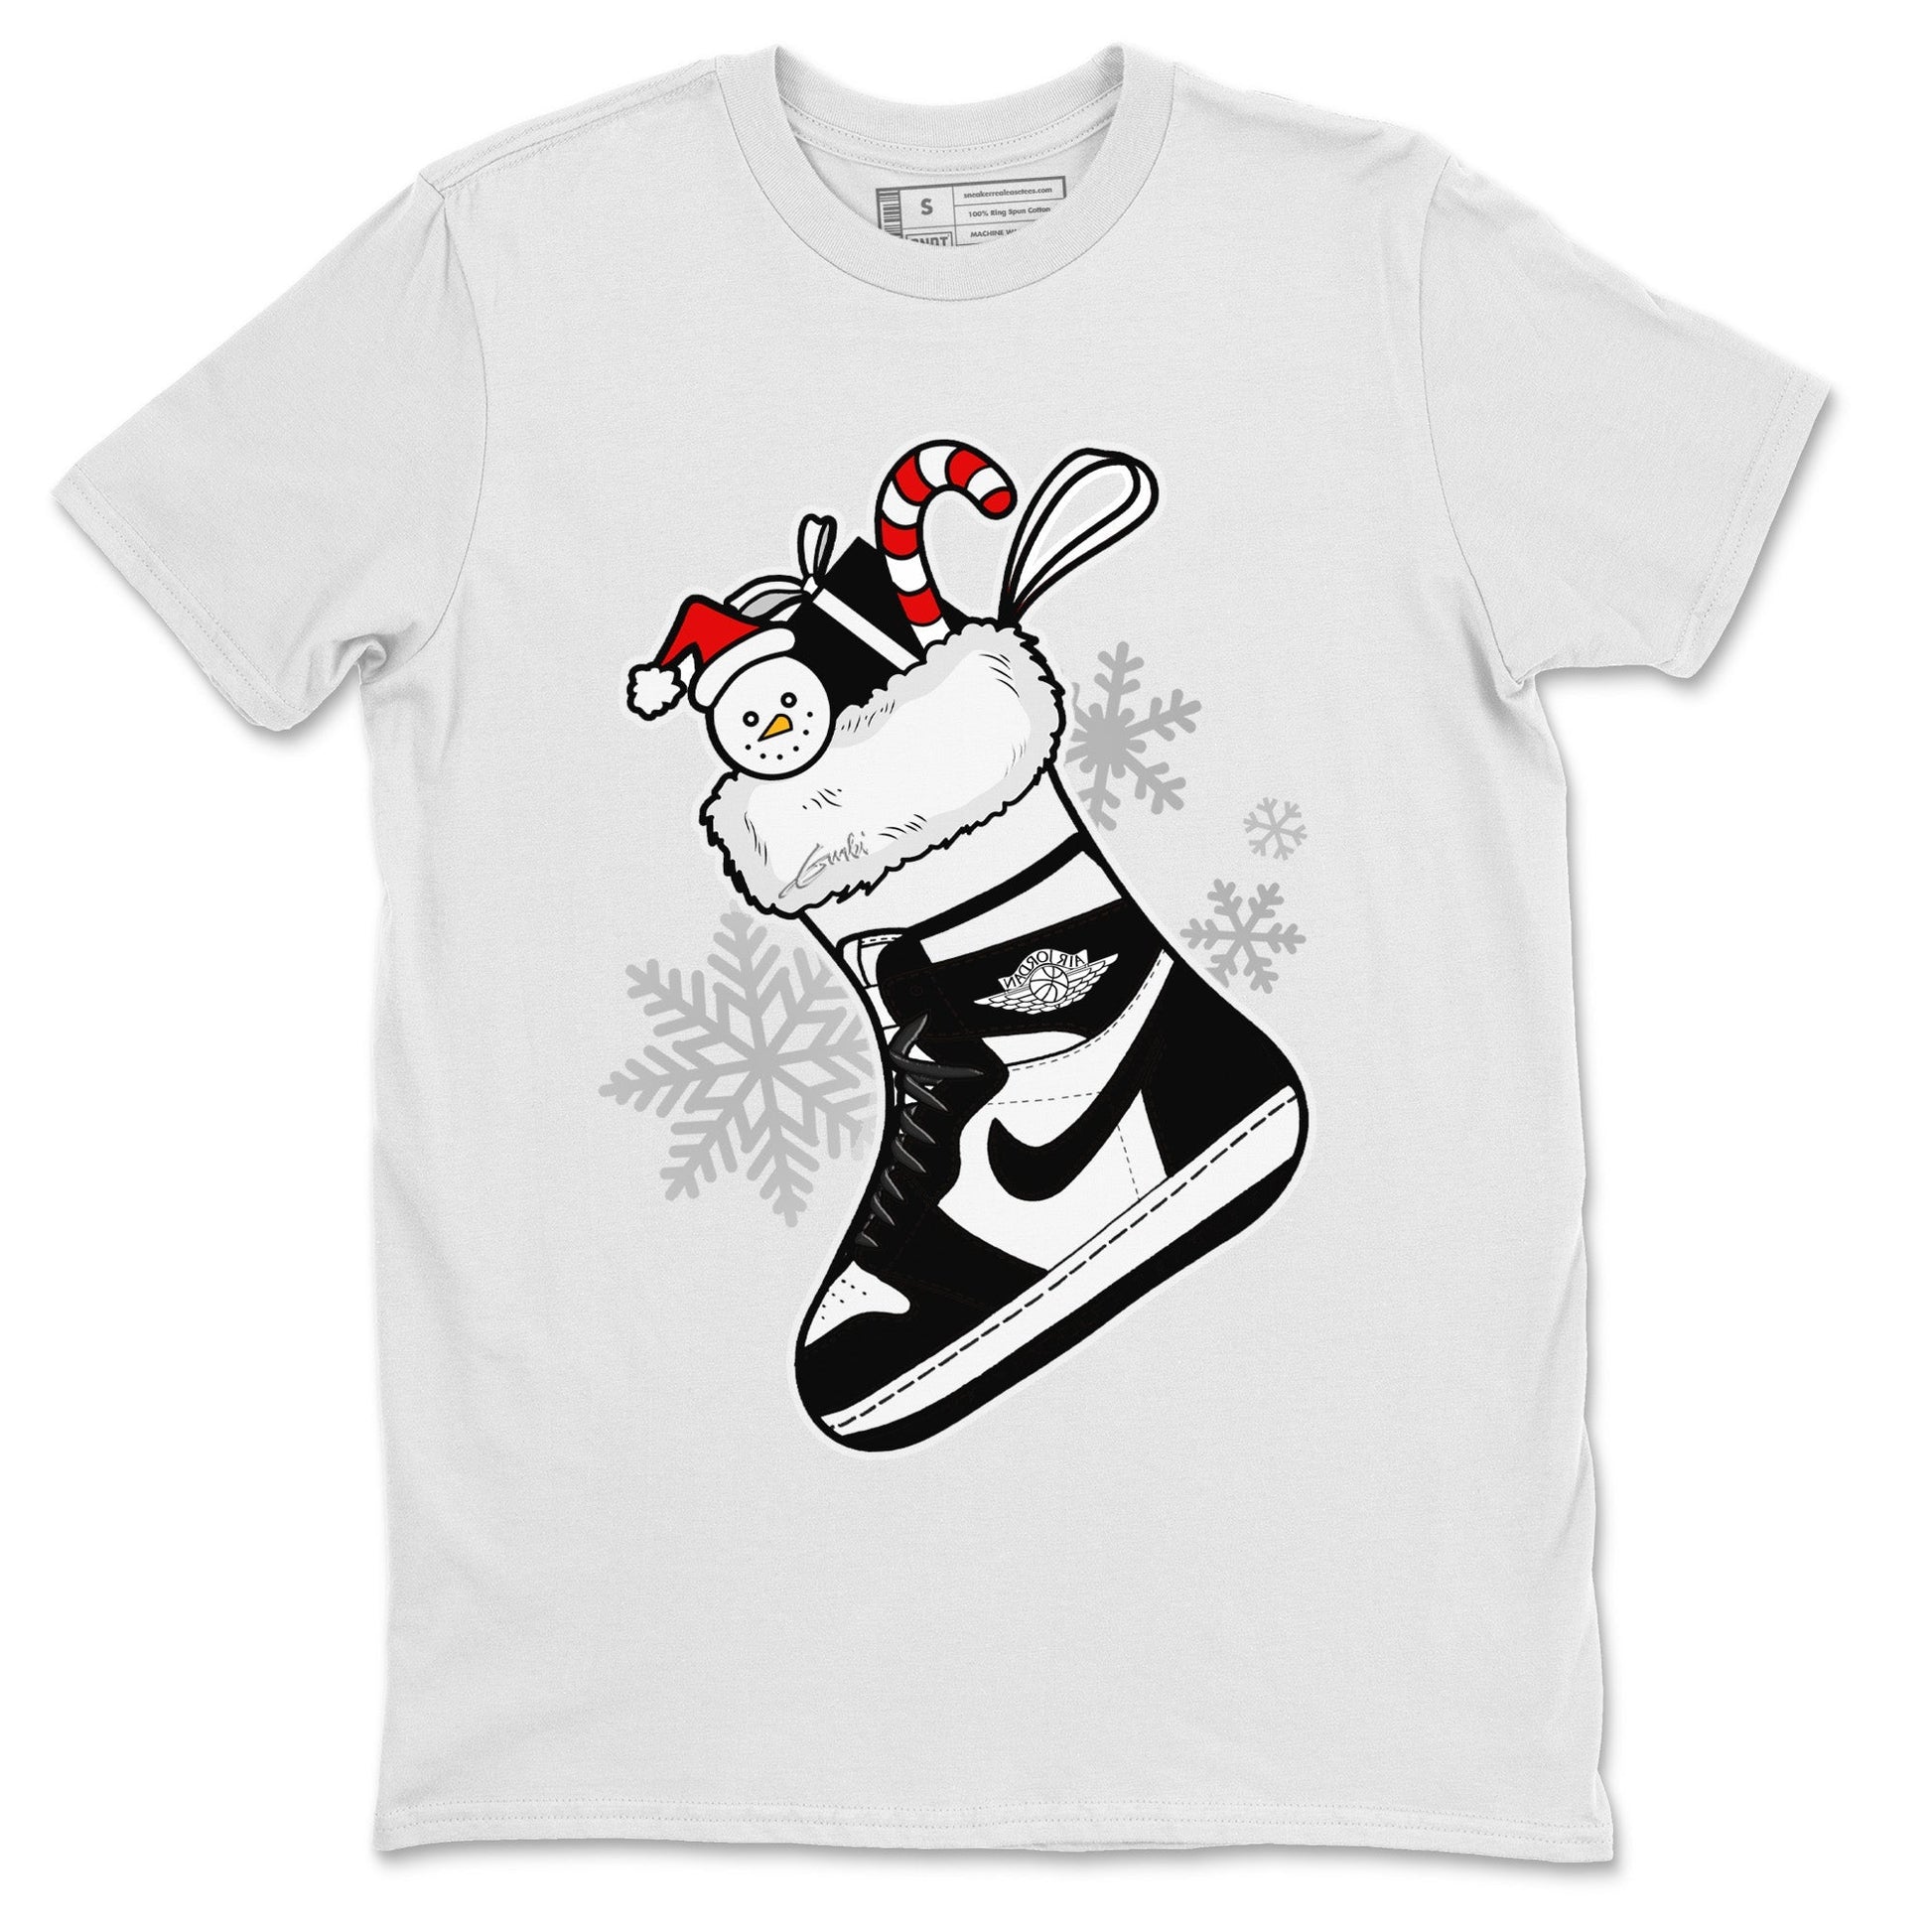 Jordan 1 Black White Sneaker Match Tees Sneaker Stocking Sneaker Tees Jordan 1 Black White Sneaker Release Tees Unisex Shirts